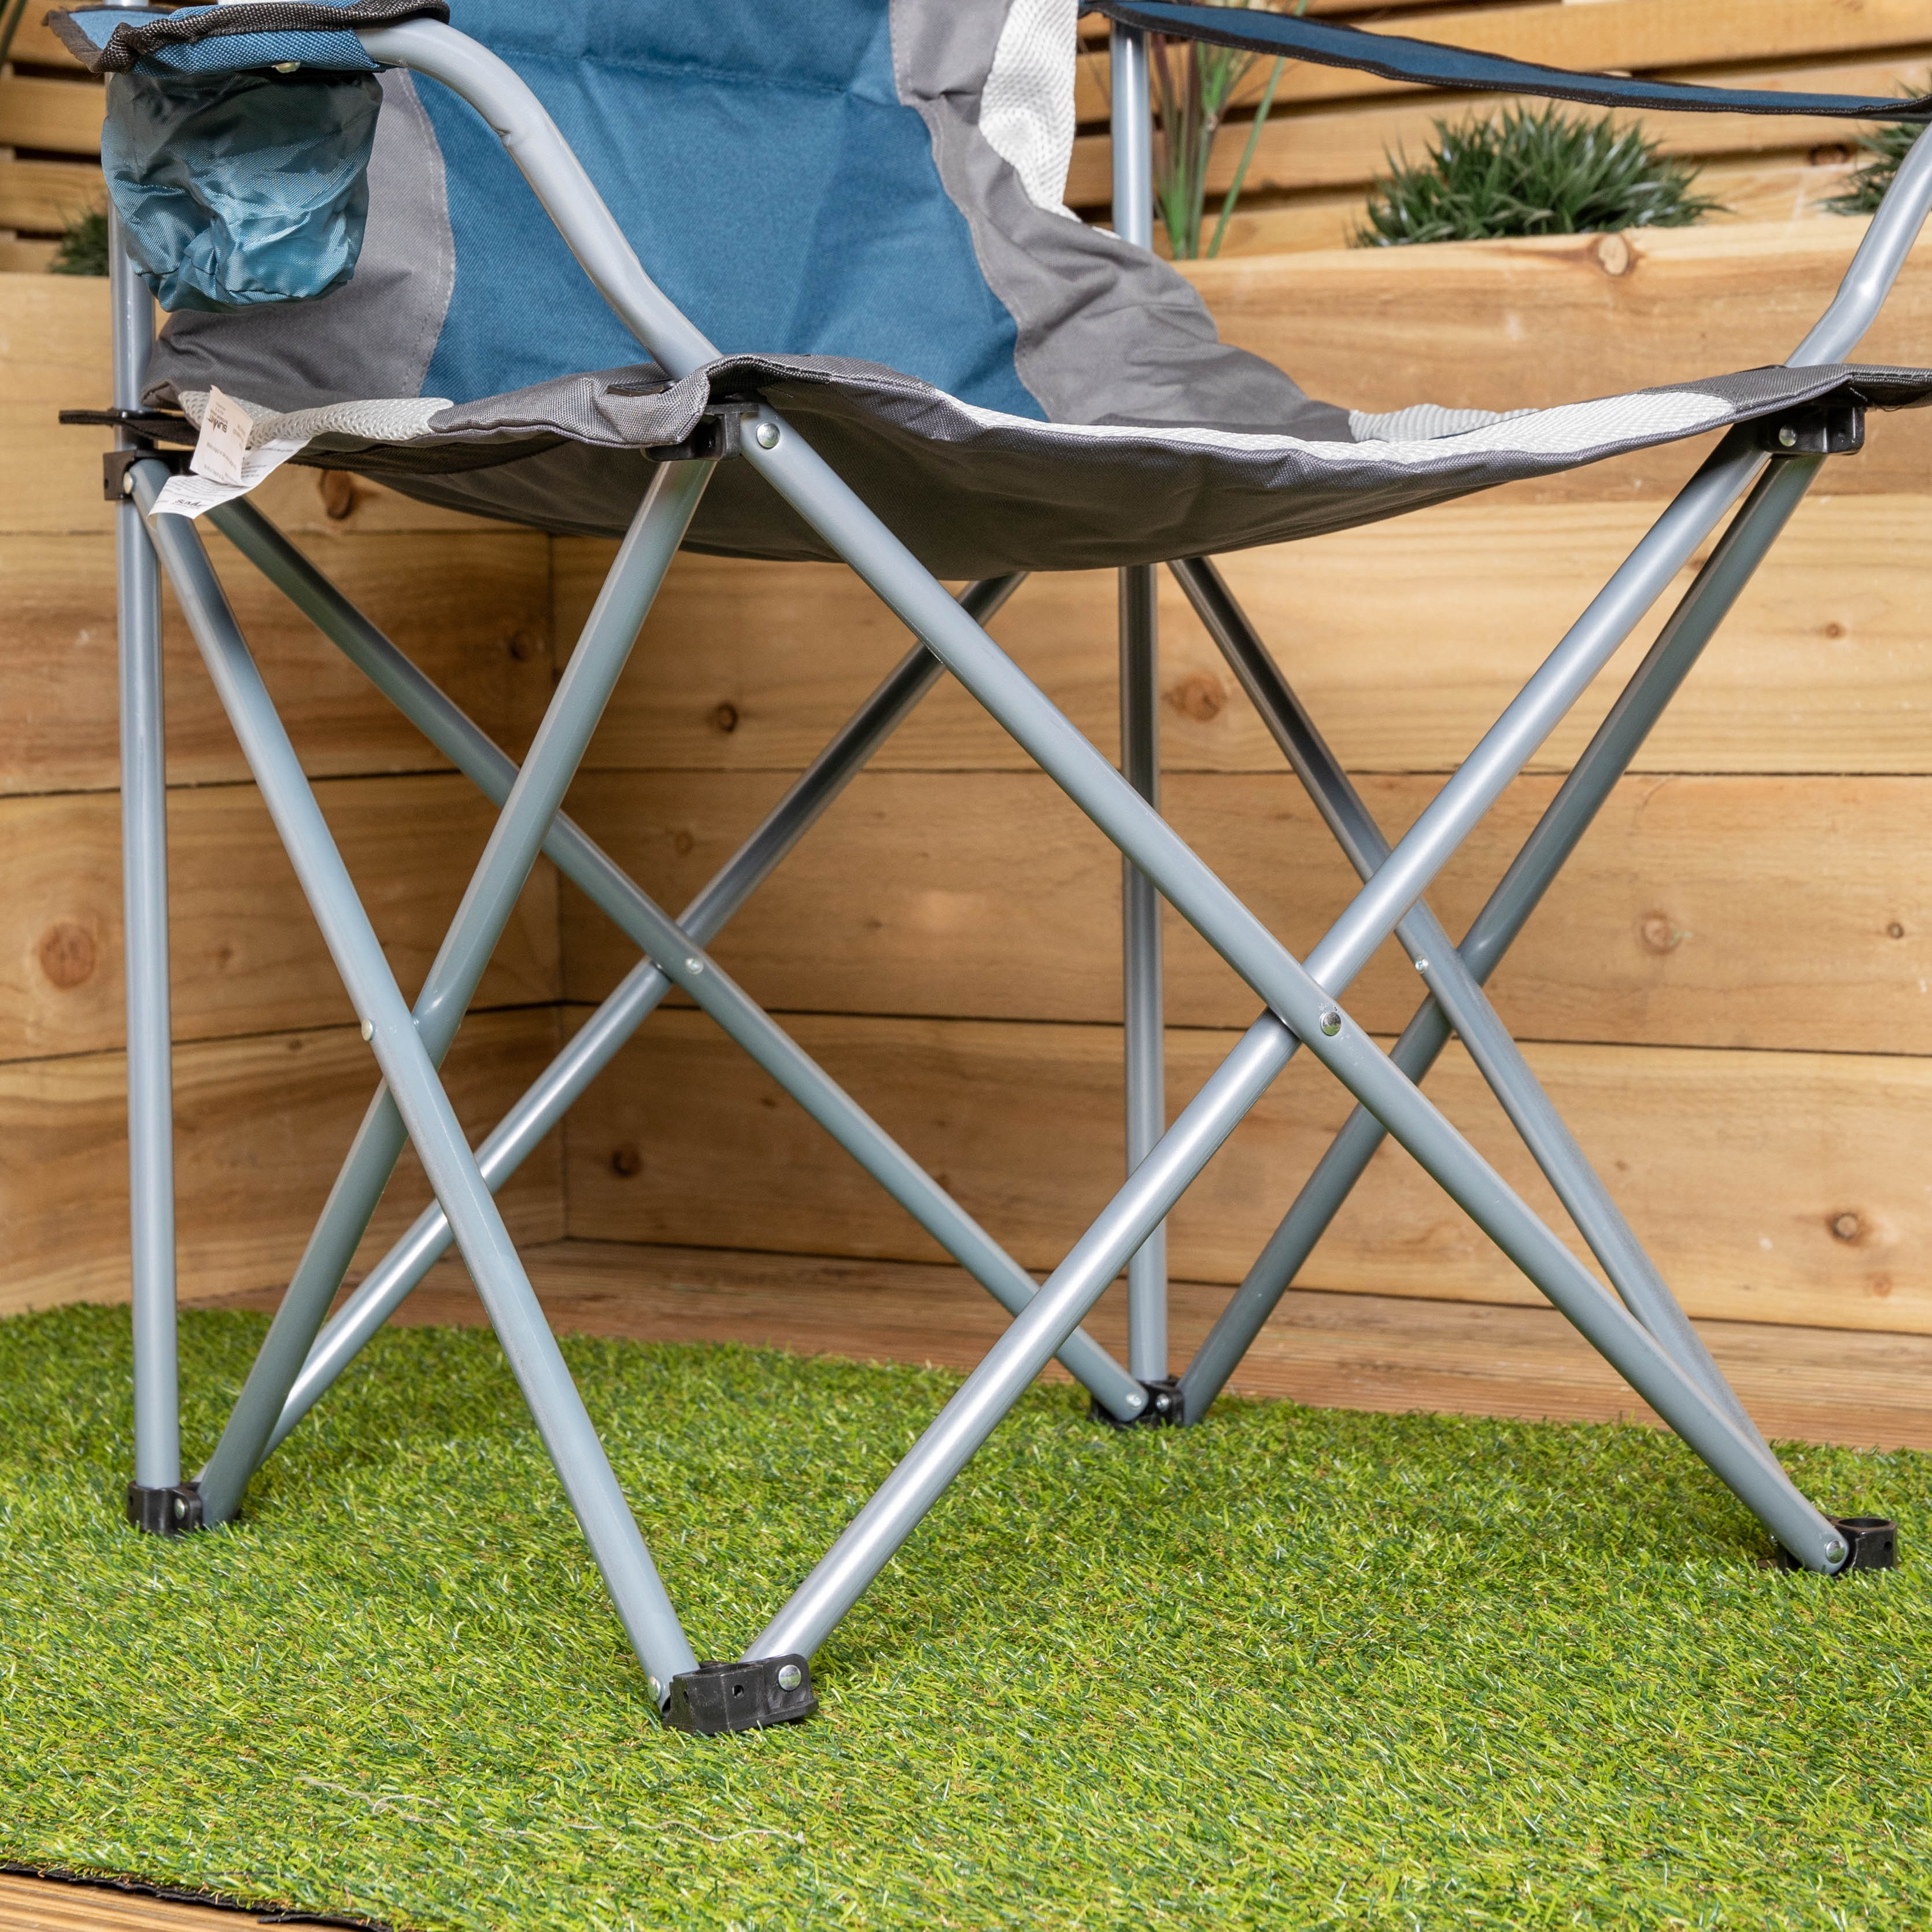 Berkley Folding Lightweight Padded High Back Relaxer Camping Chair in Indigo Blue